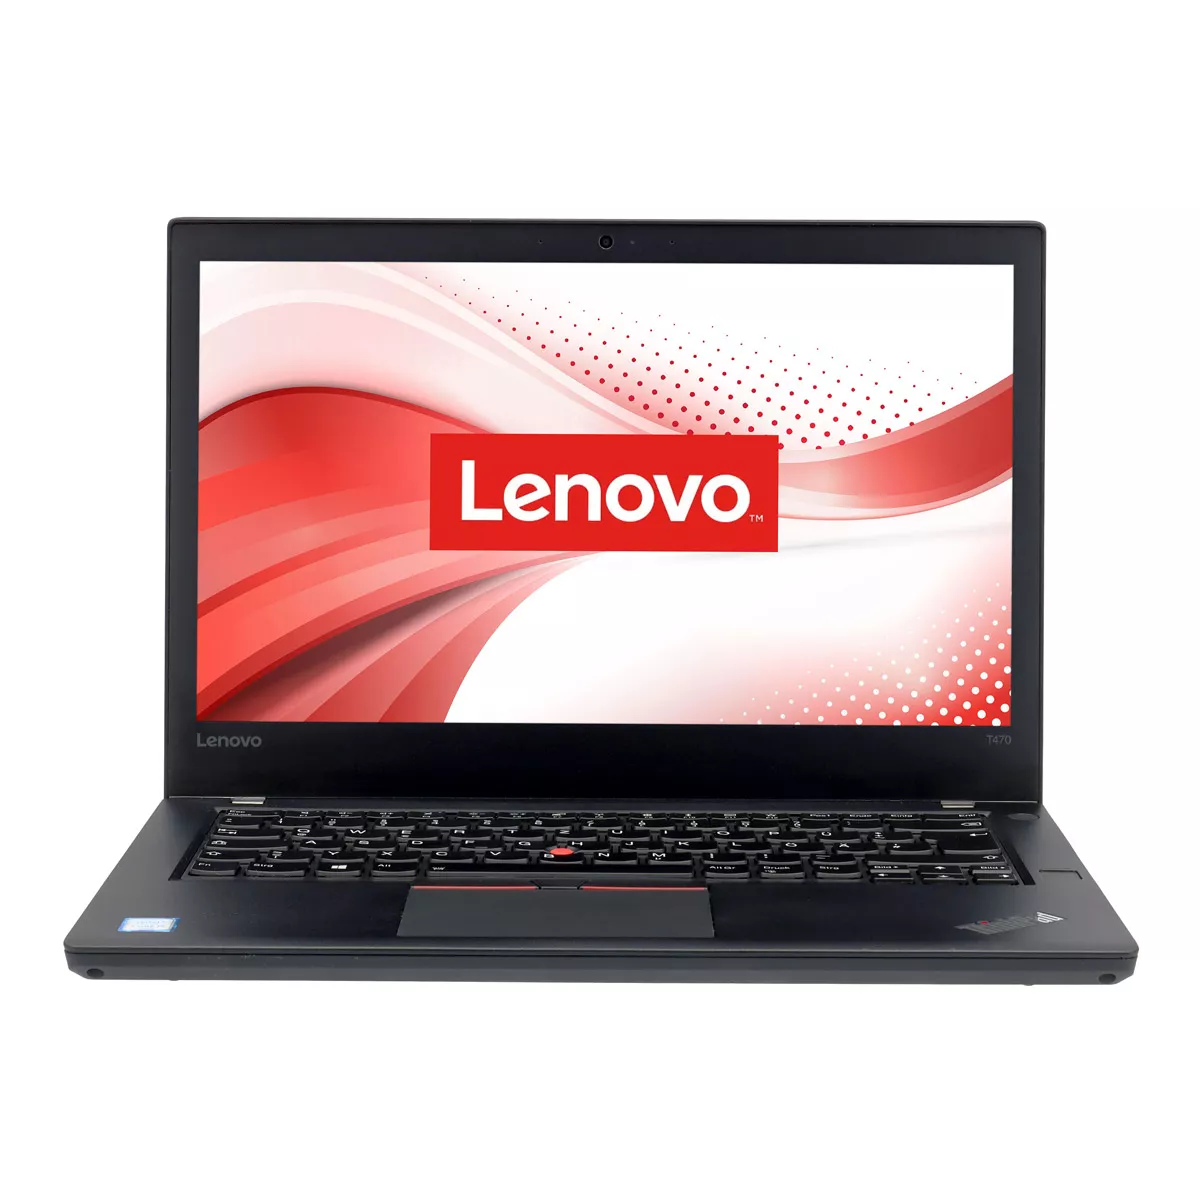 Lenovo ThinkPad T470 Core i5 6300U Full-HD 240 GB M.2 SSD Touch Webcam B